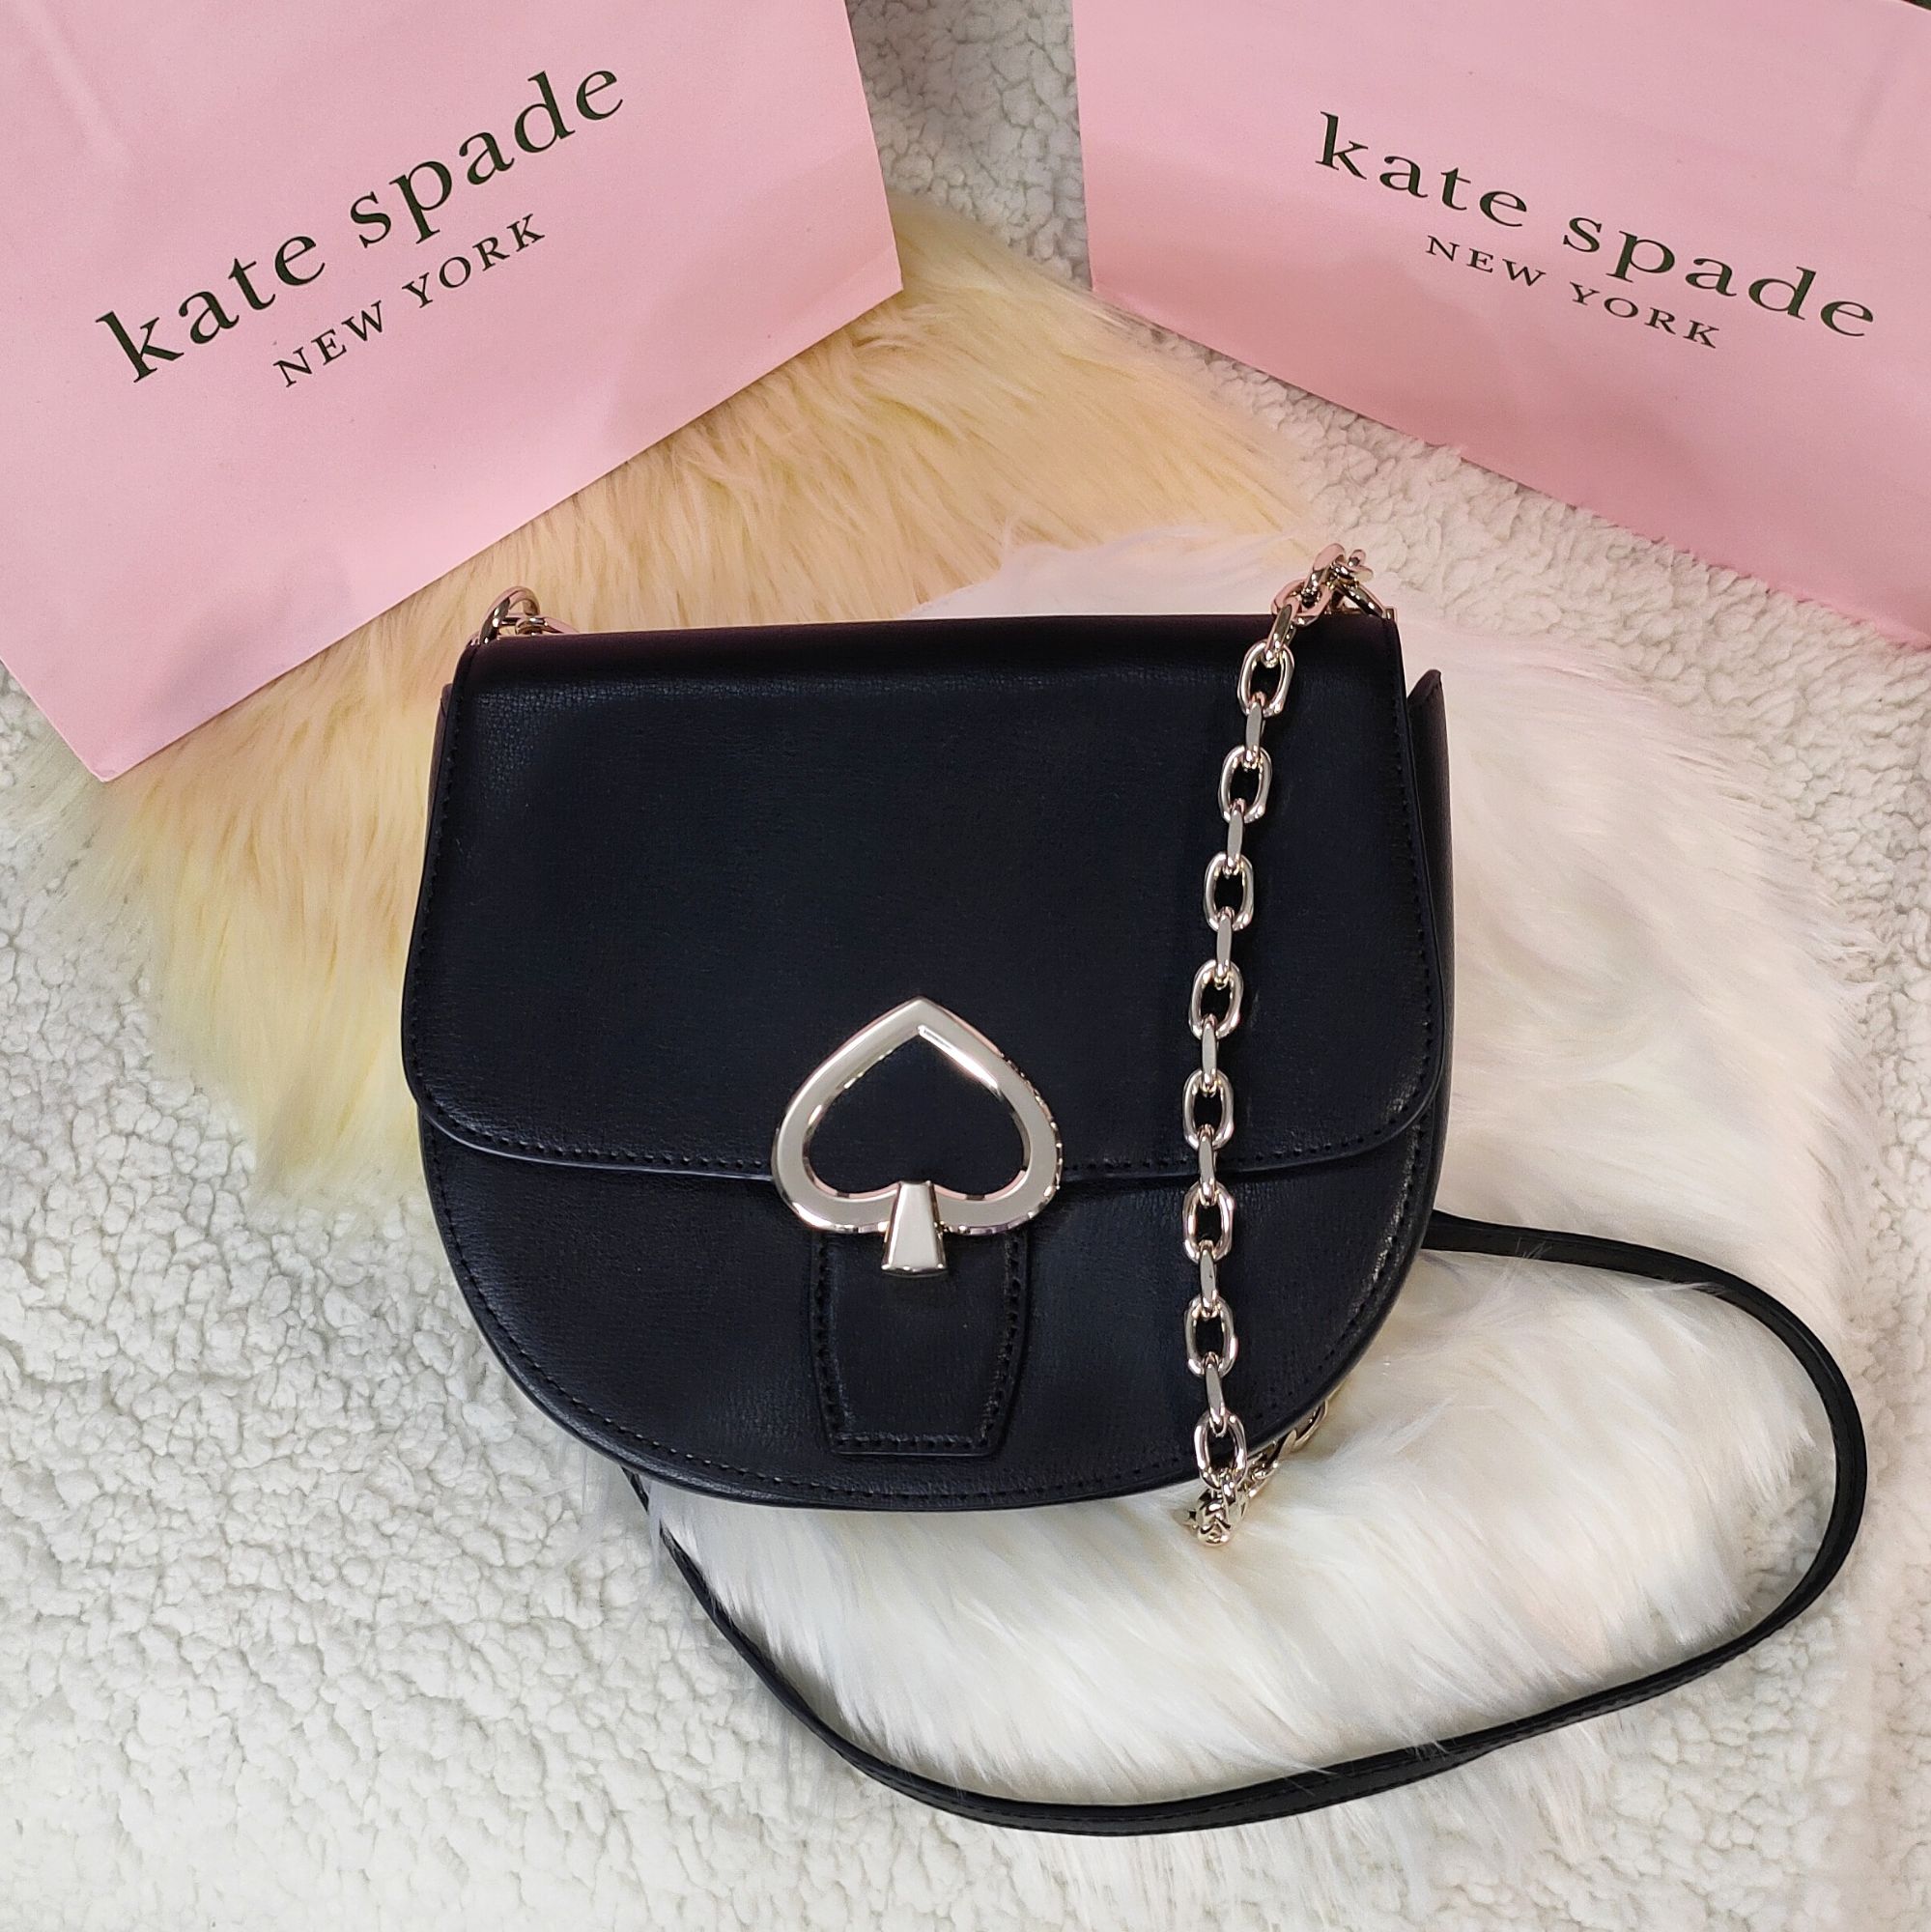 Kate Spade New York Robyn Medium Chain Saddle Bag